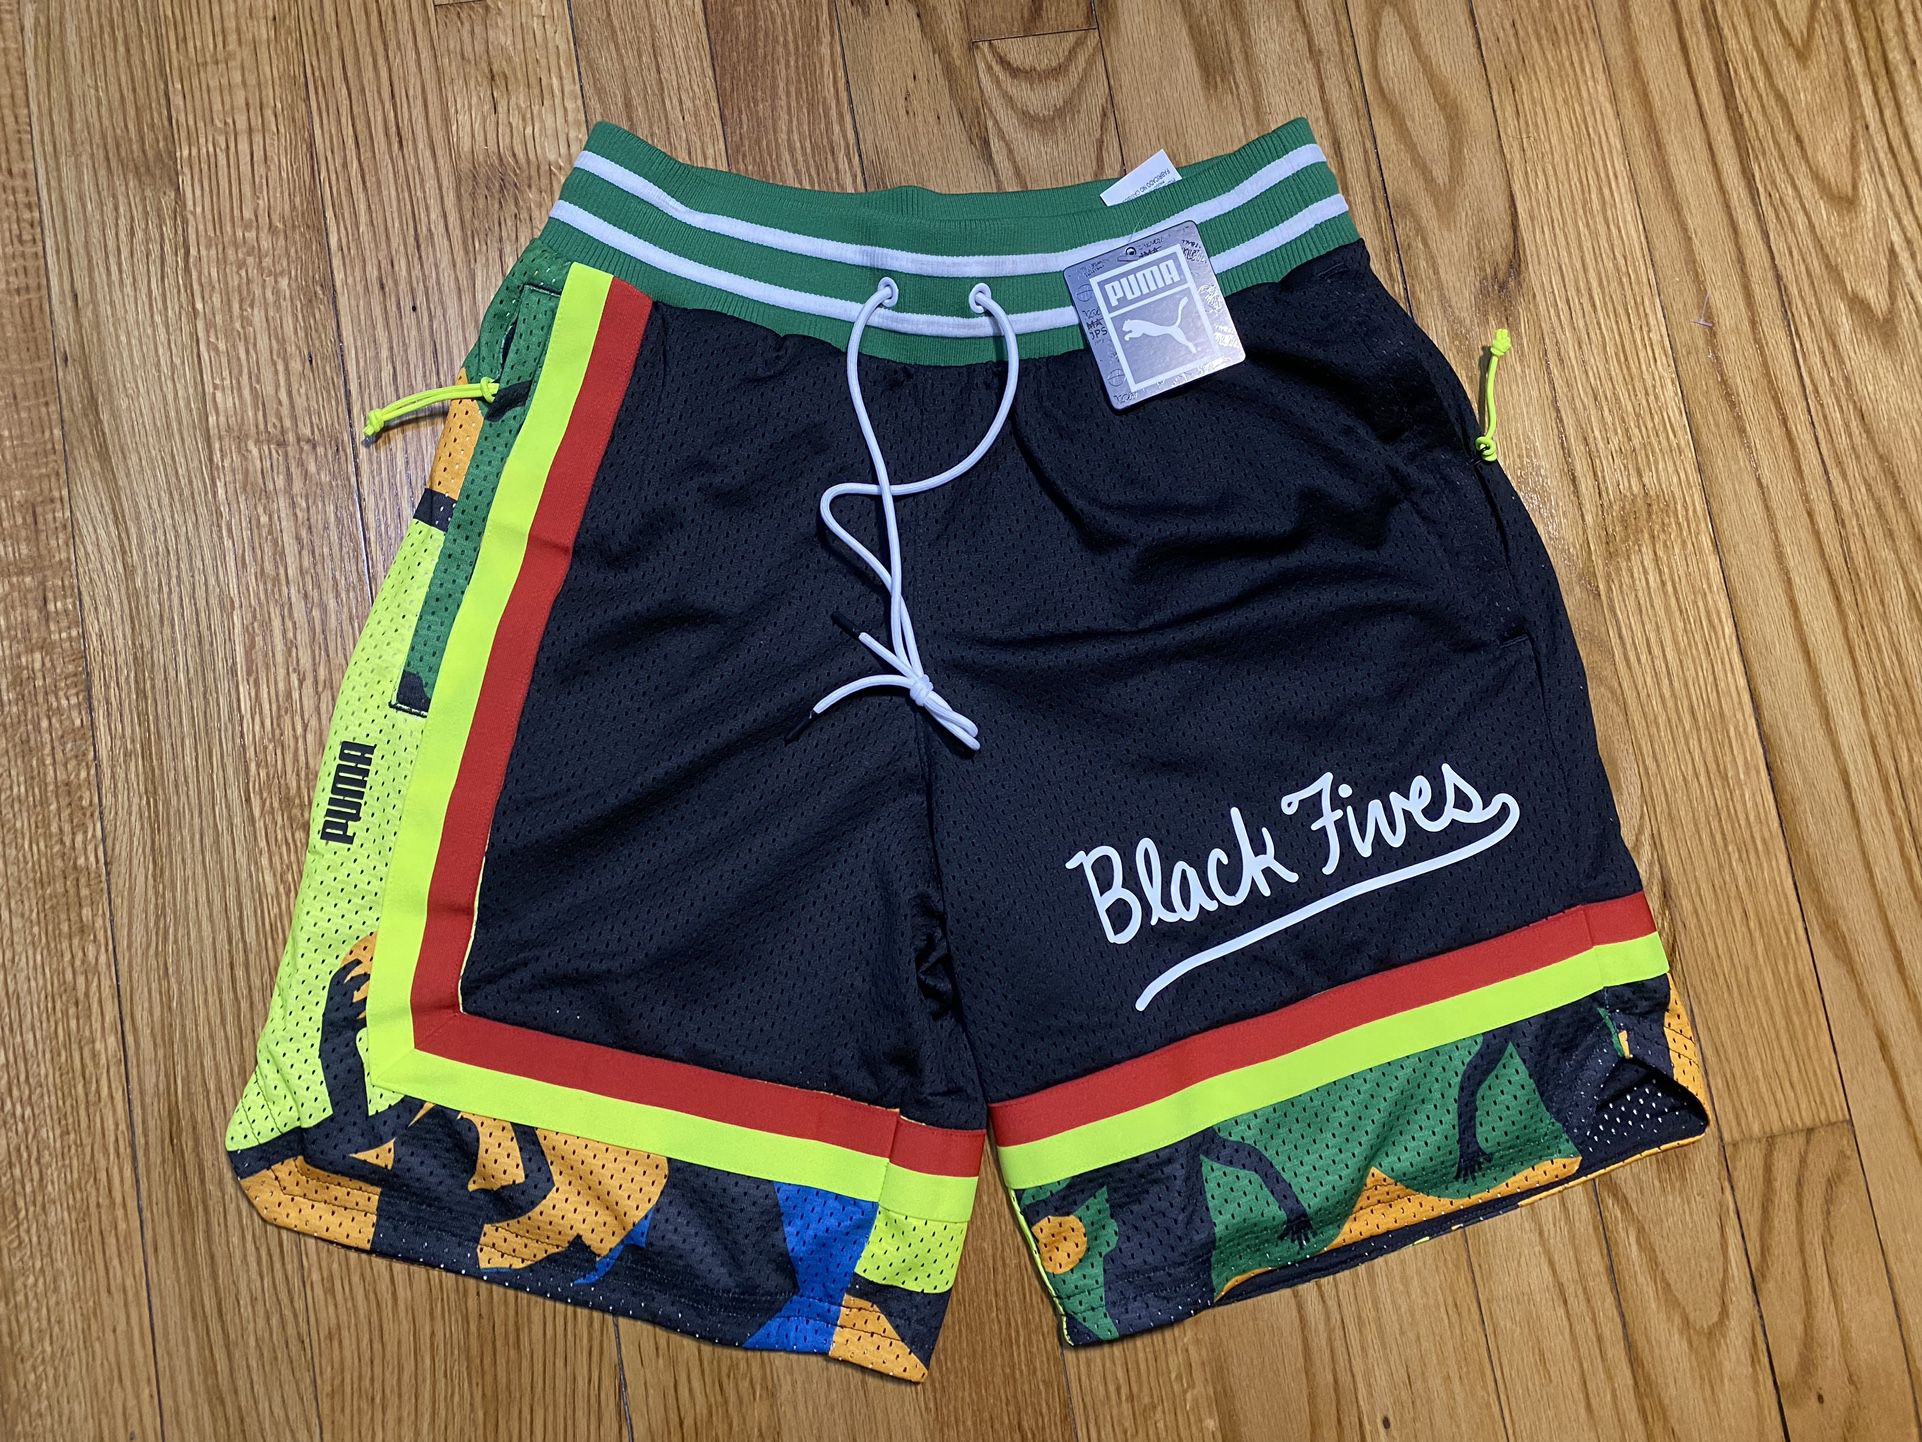 Black Fives x PUMA Front Page Basketball Shorts – Black Fives